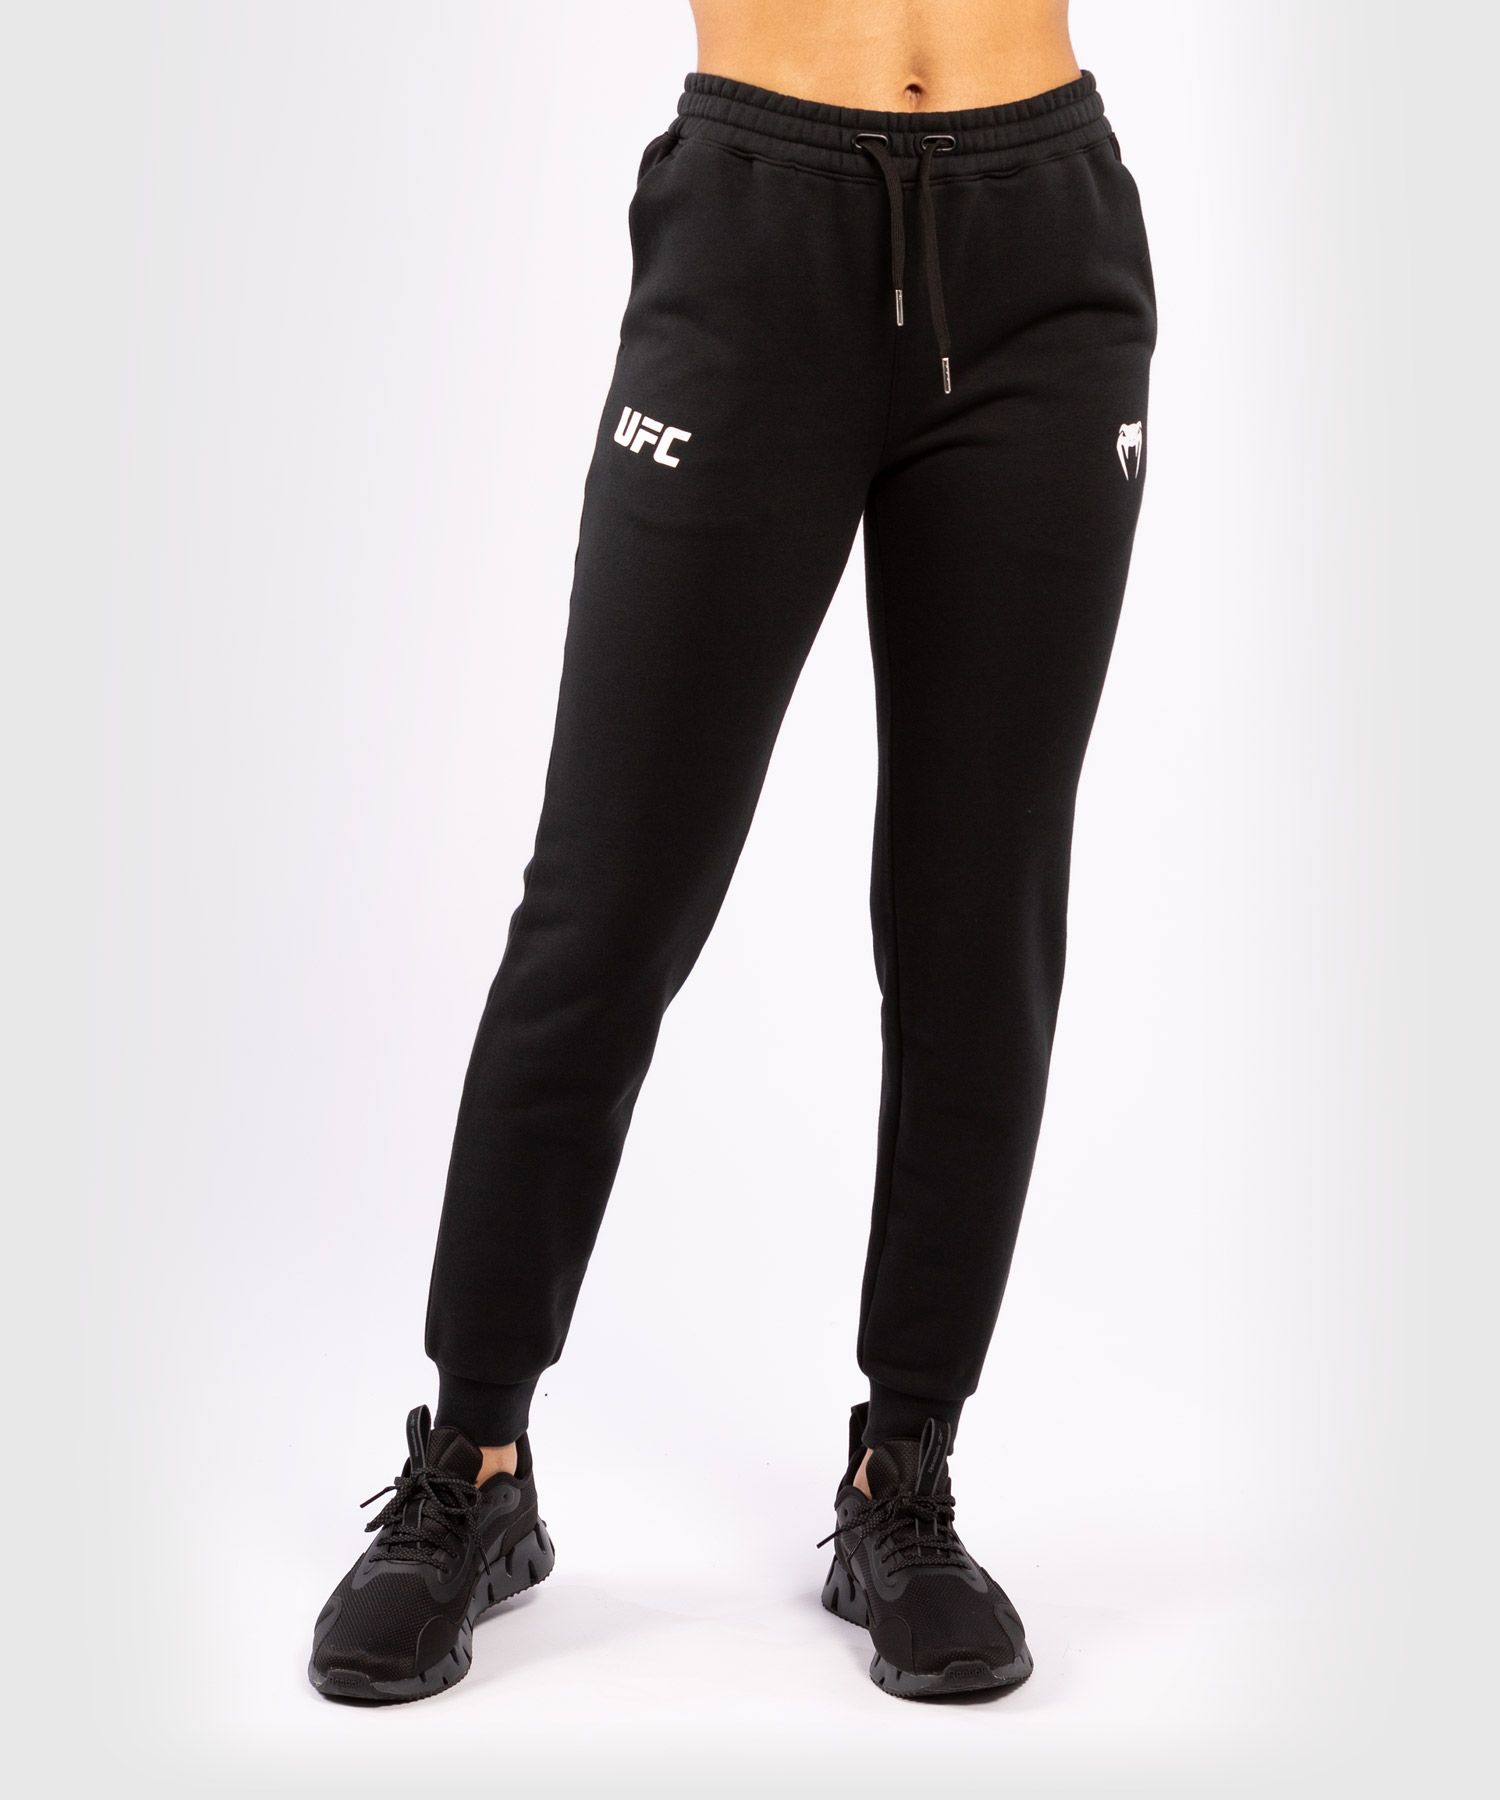 Pantalon de Jogging Femme UFC Venum Replica - Noir